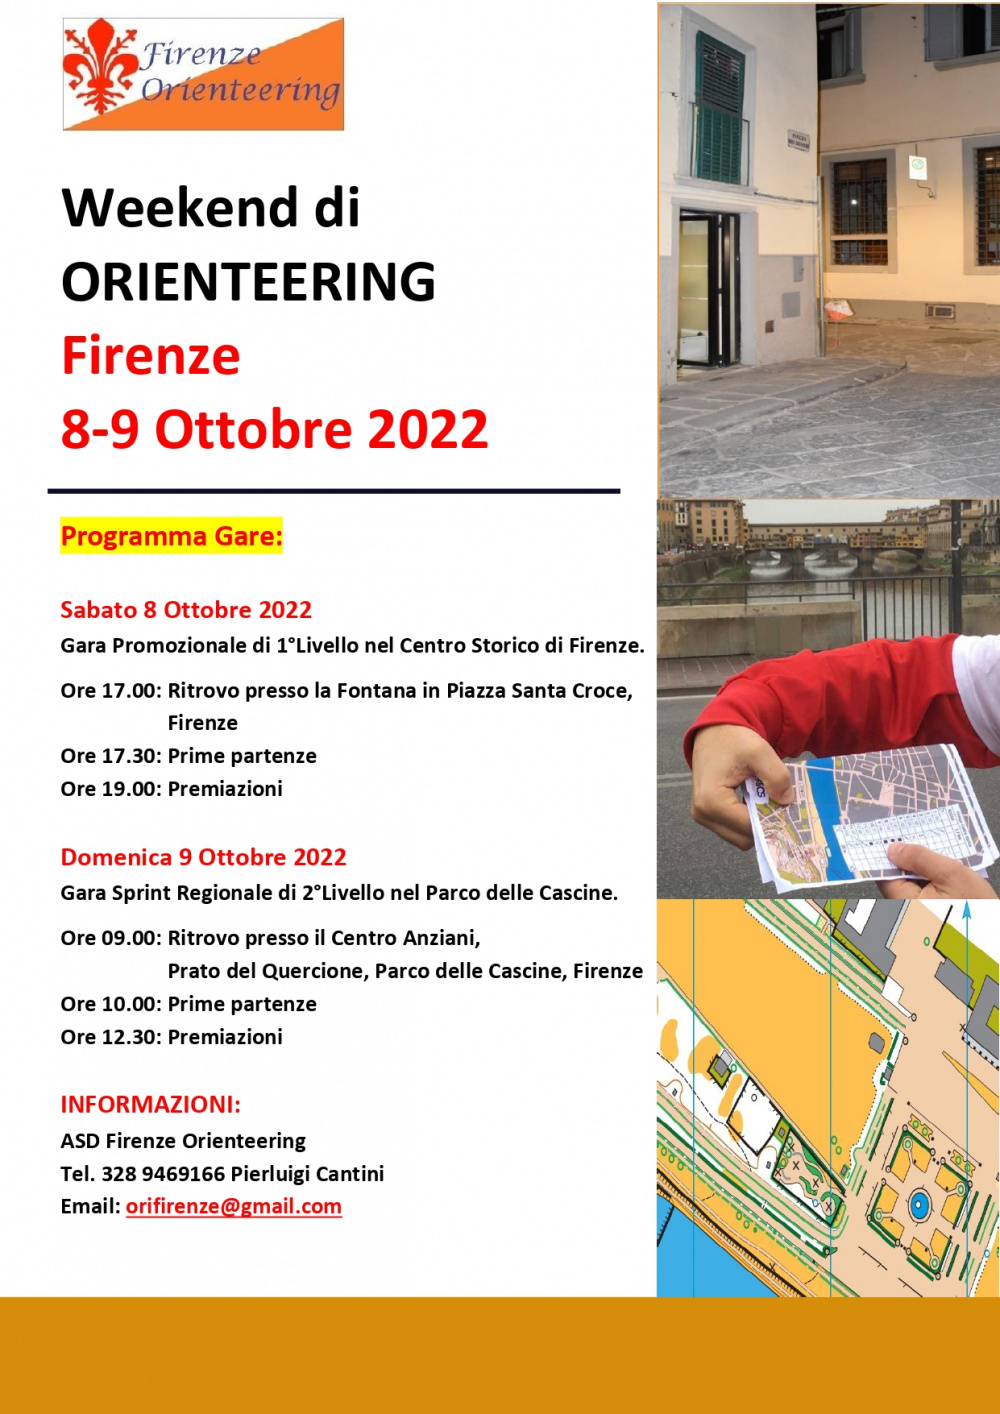 Weekend di Orienteering a Firenze